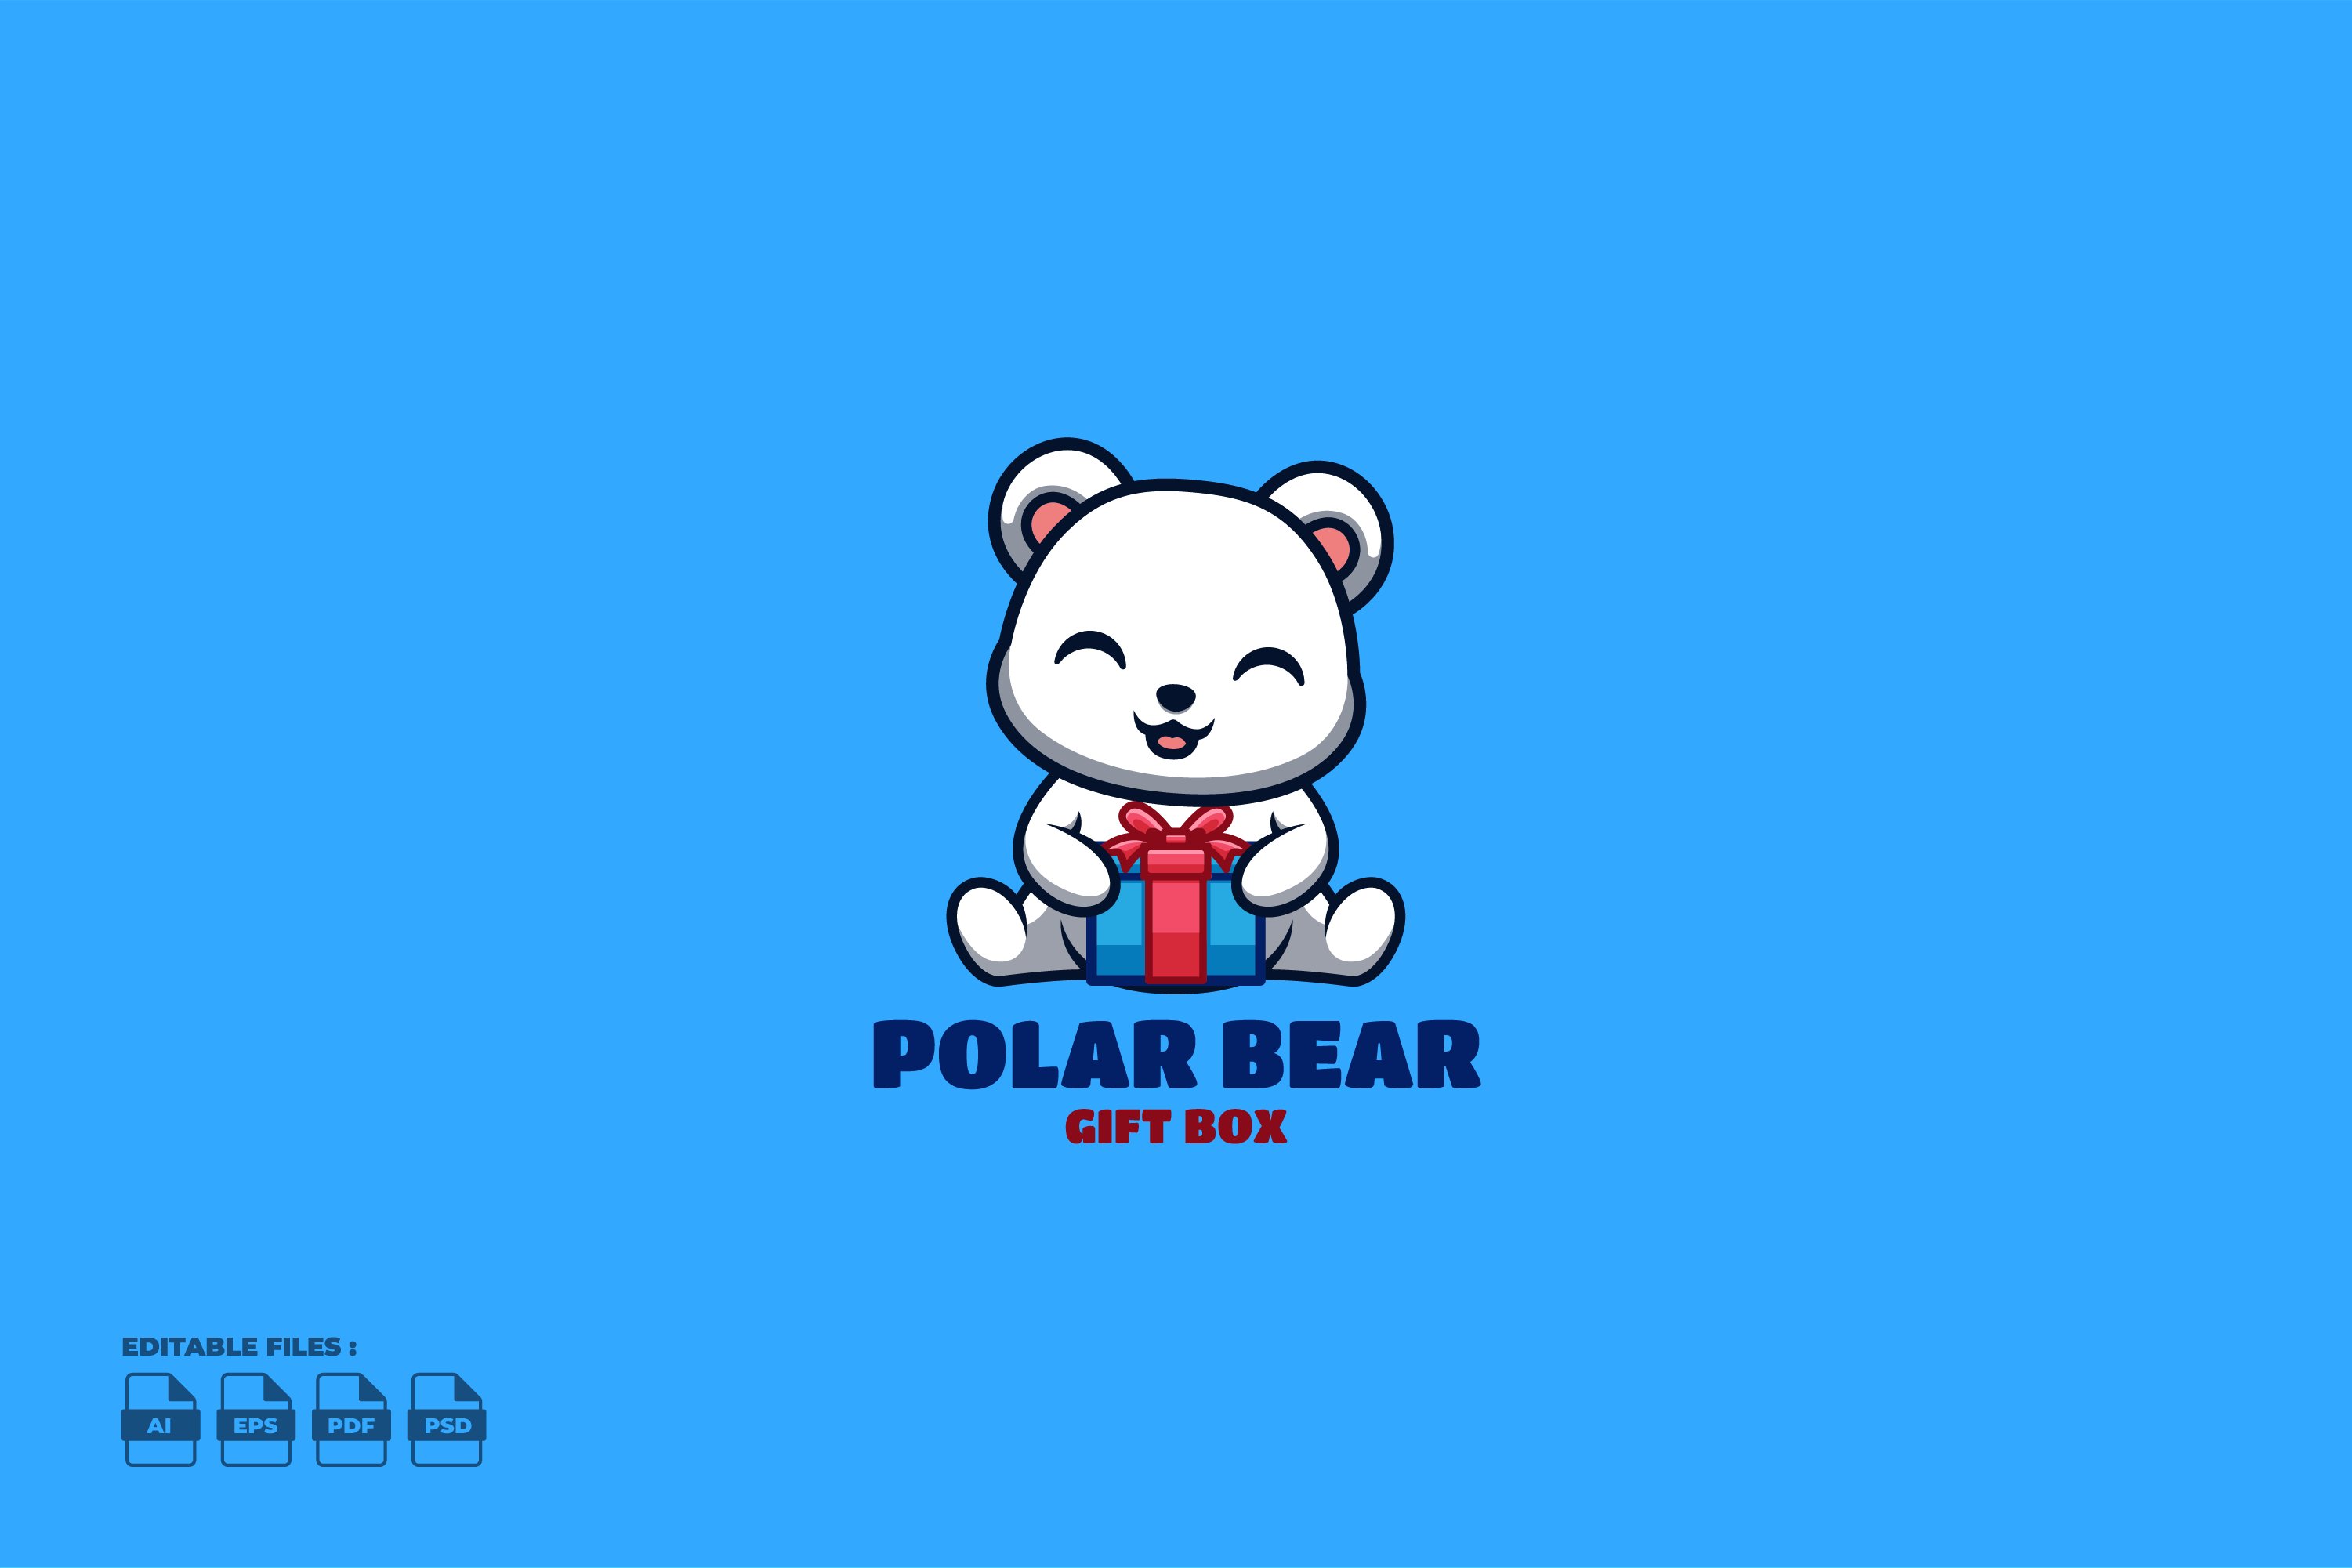 Gift Box Polar Bear Cute Mascot Logo cover image.